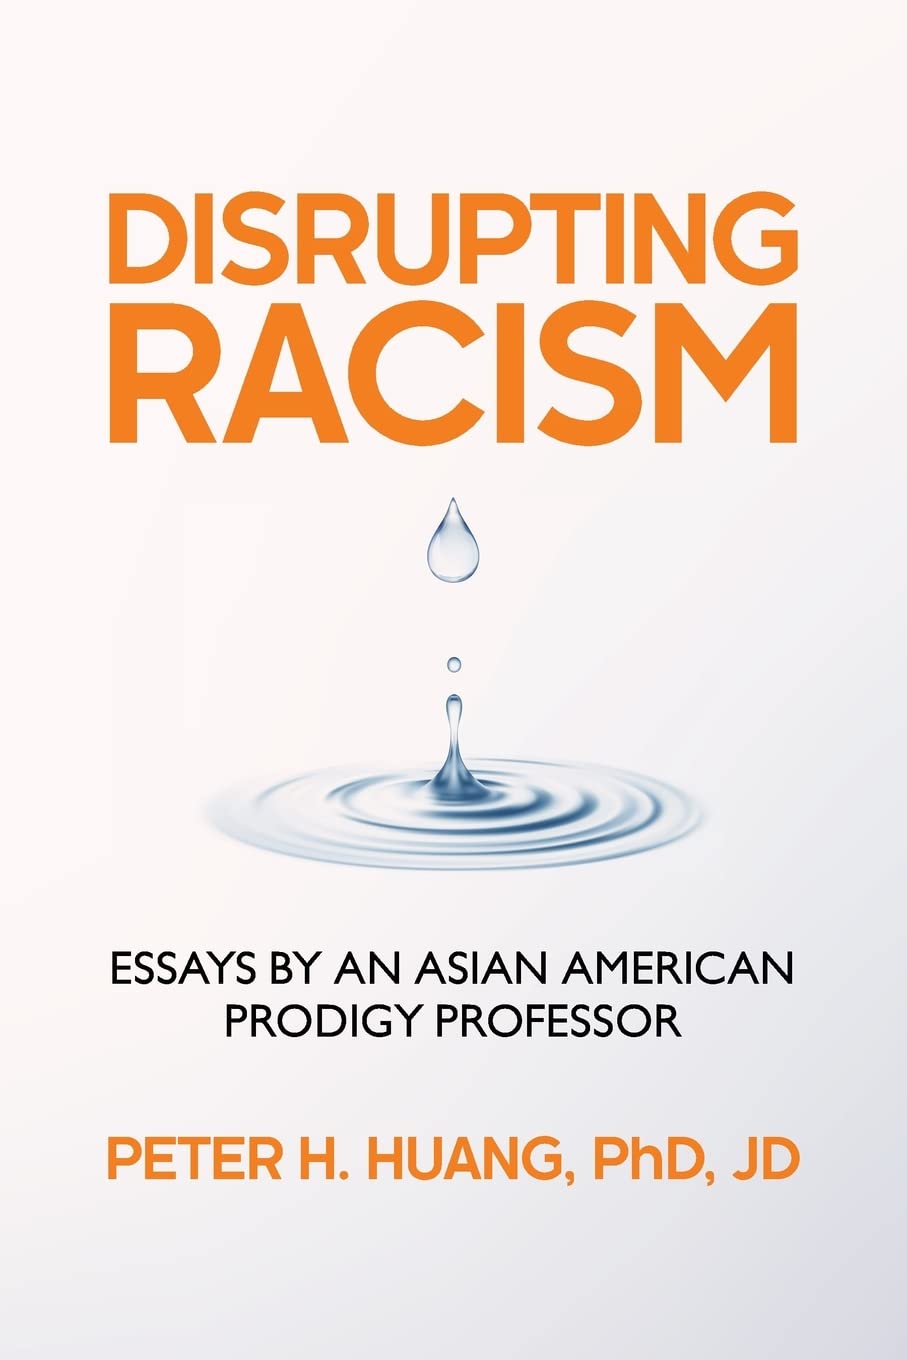 Disrupting Racism by Dr. Peter H. Huang